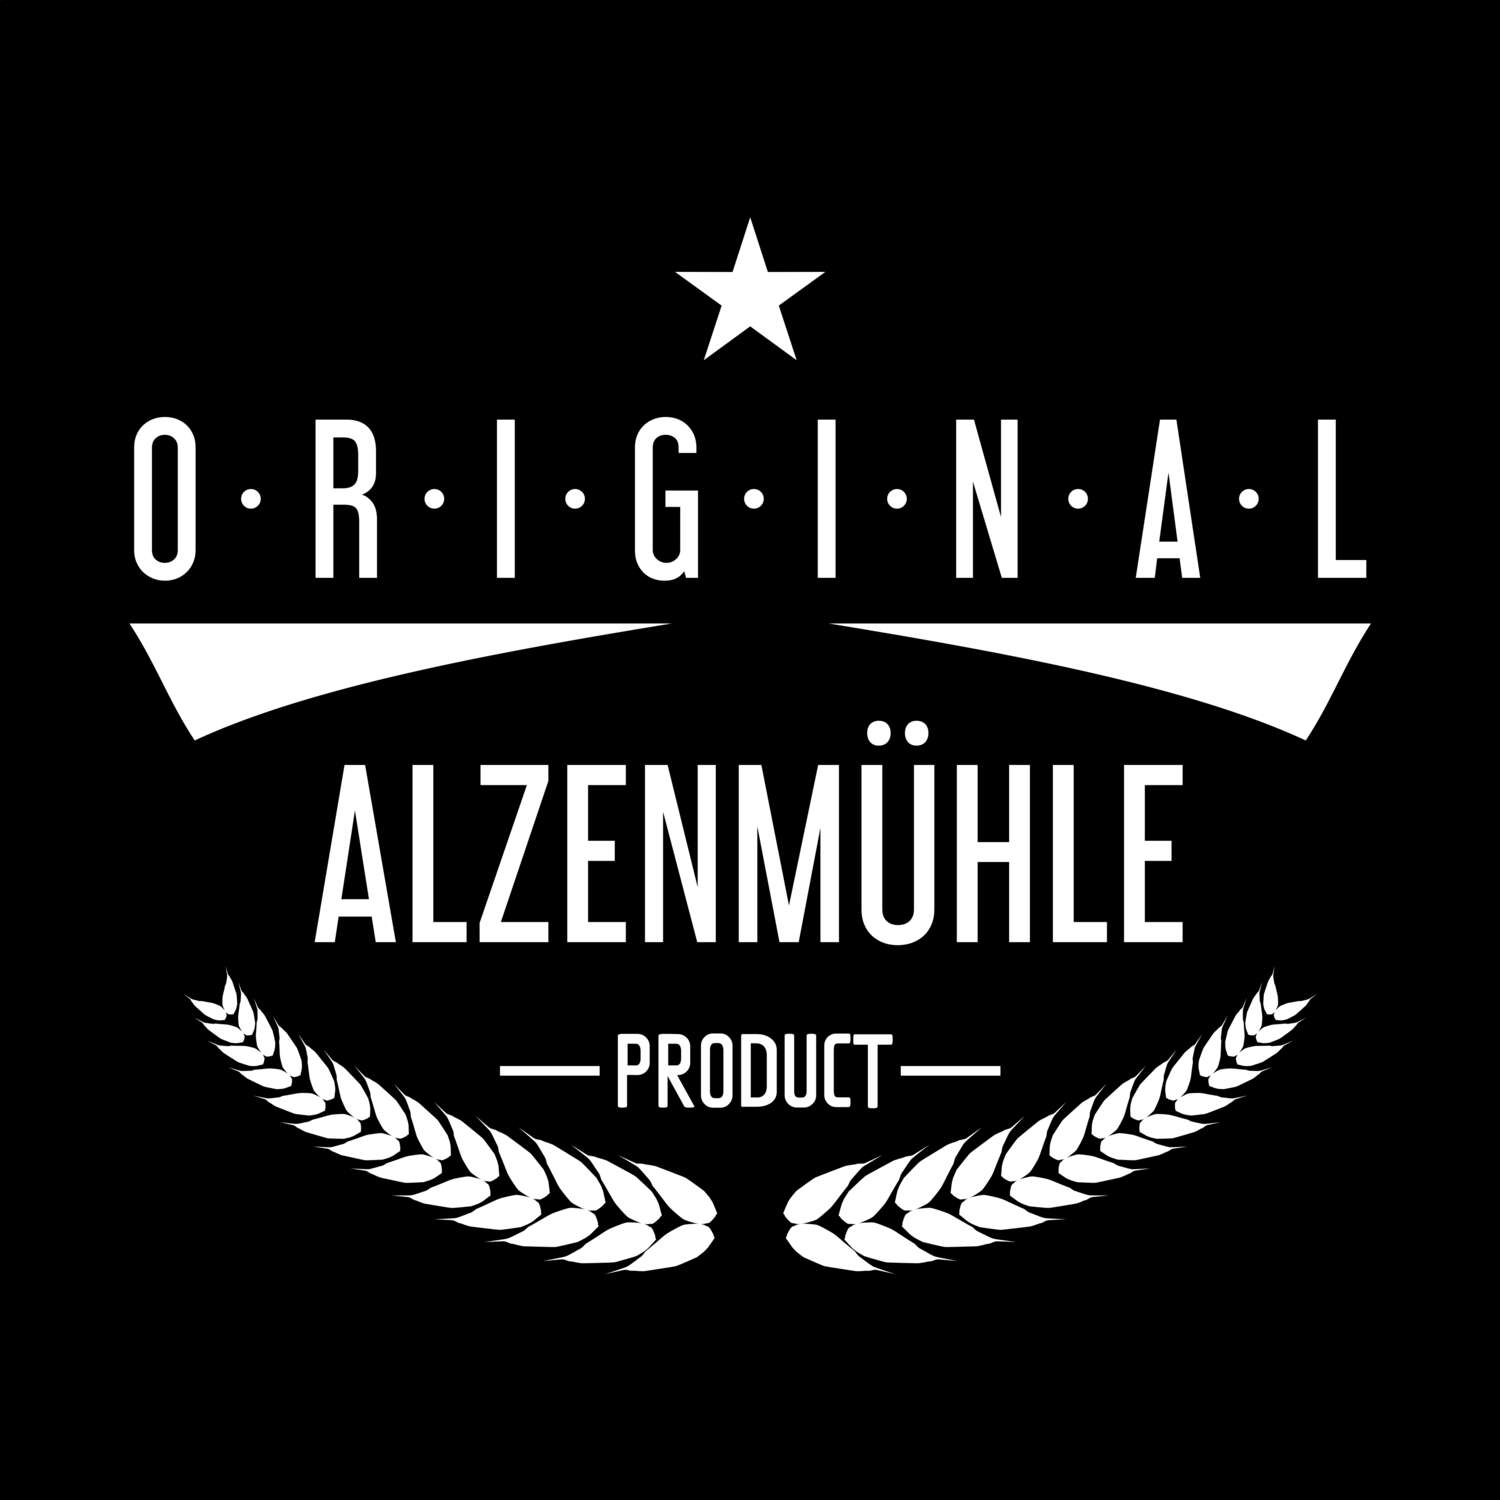 Alzenmühle T-Shirt »Original Product«